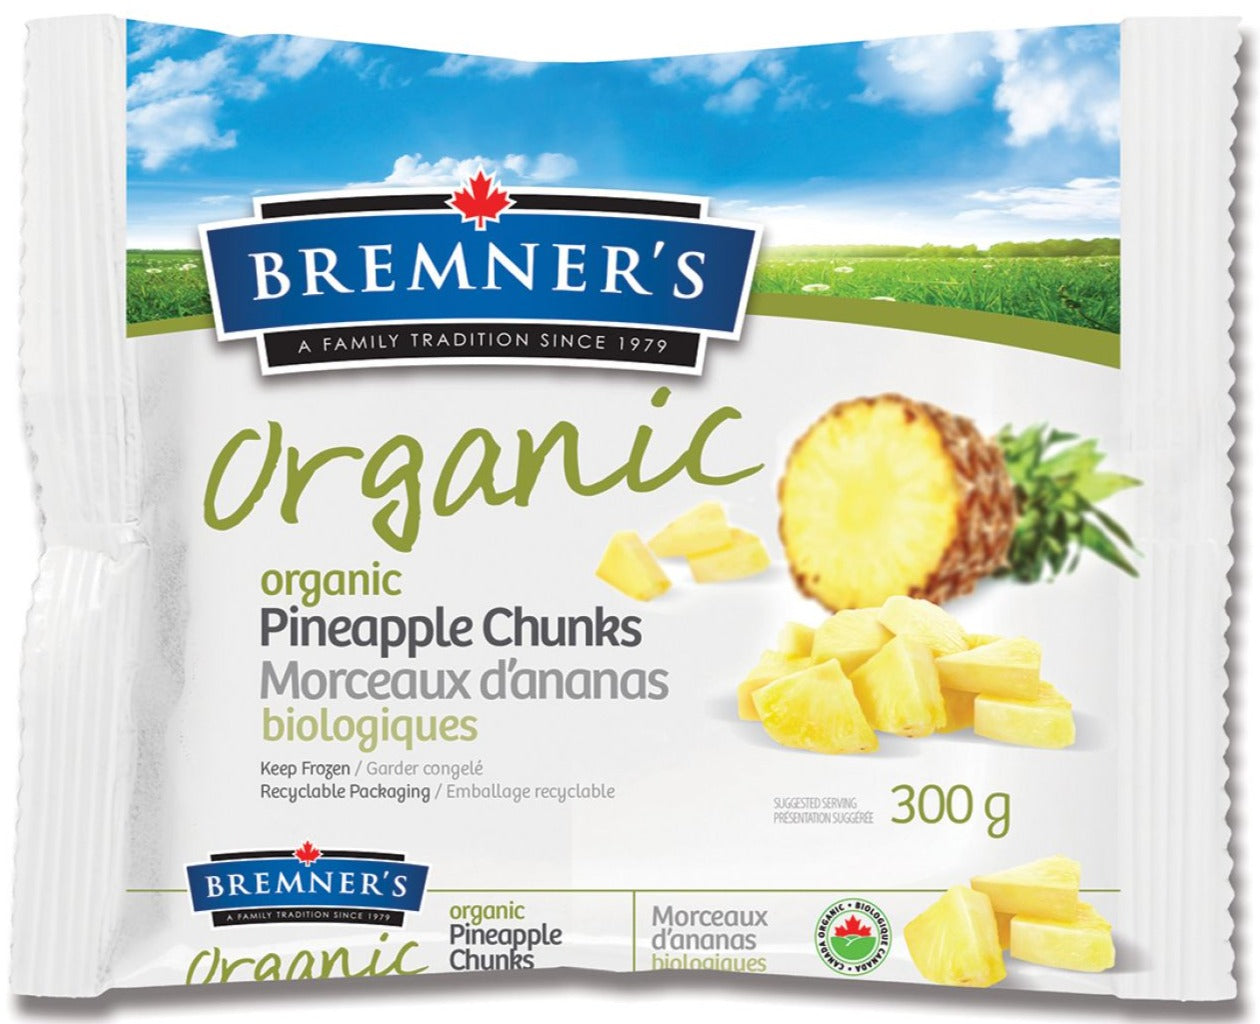 Organic Pineapple Chunks by Bremnar's 300g Frozen